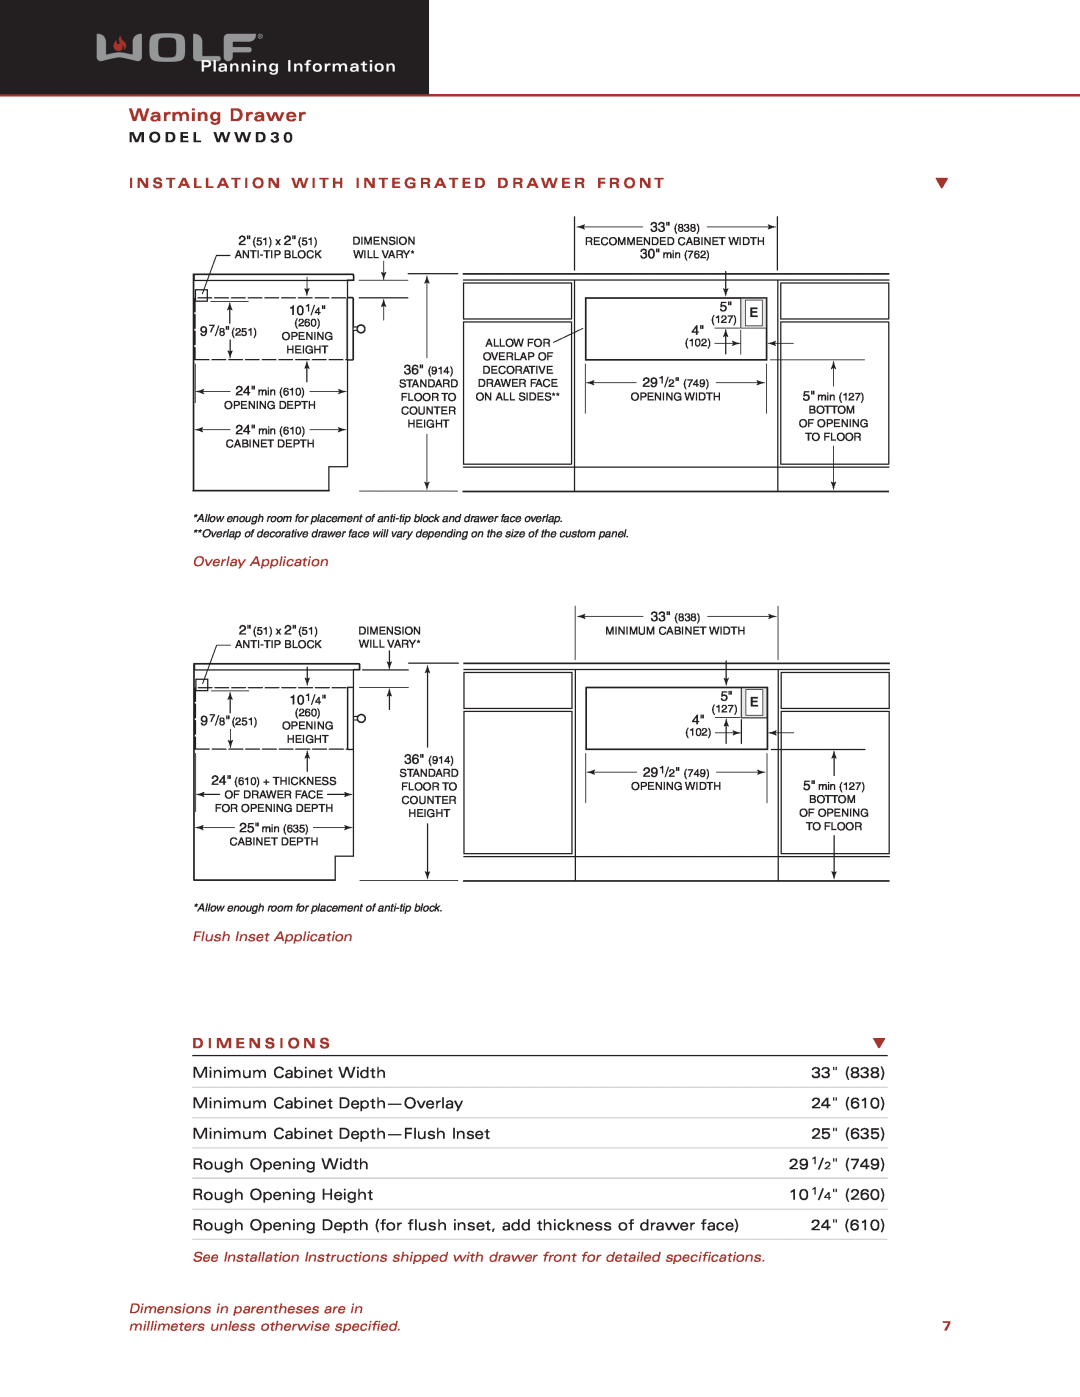 Wolf Appliance Company WWD30 dimensions Warming Drawer, Planning Information, M O D E L W W D, D I M E N S I O N S, 101/4 